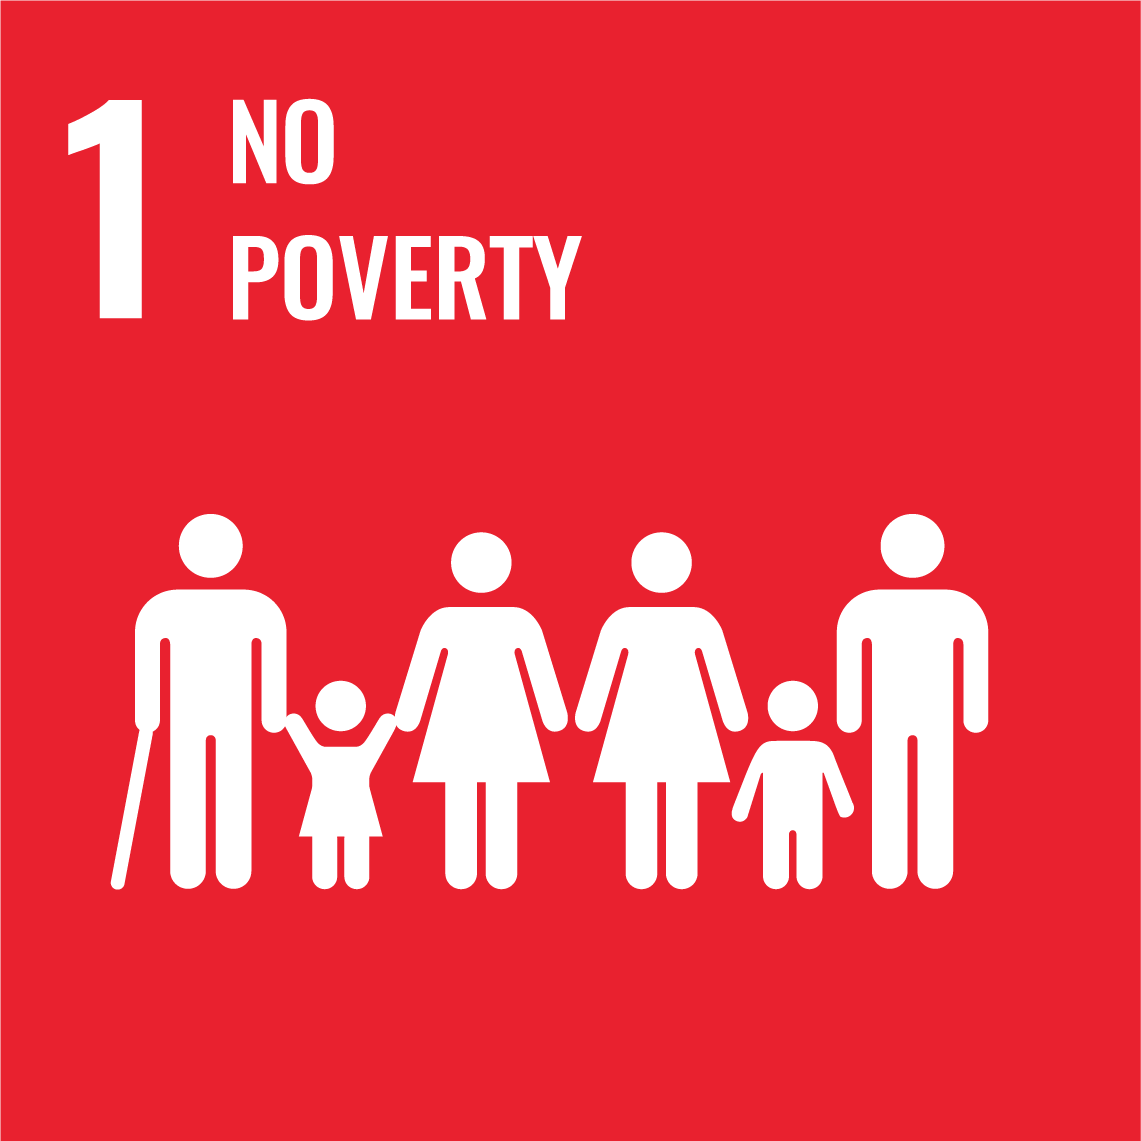 Sustainable Development Goals 1 - No poverty